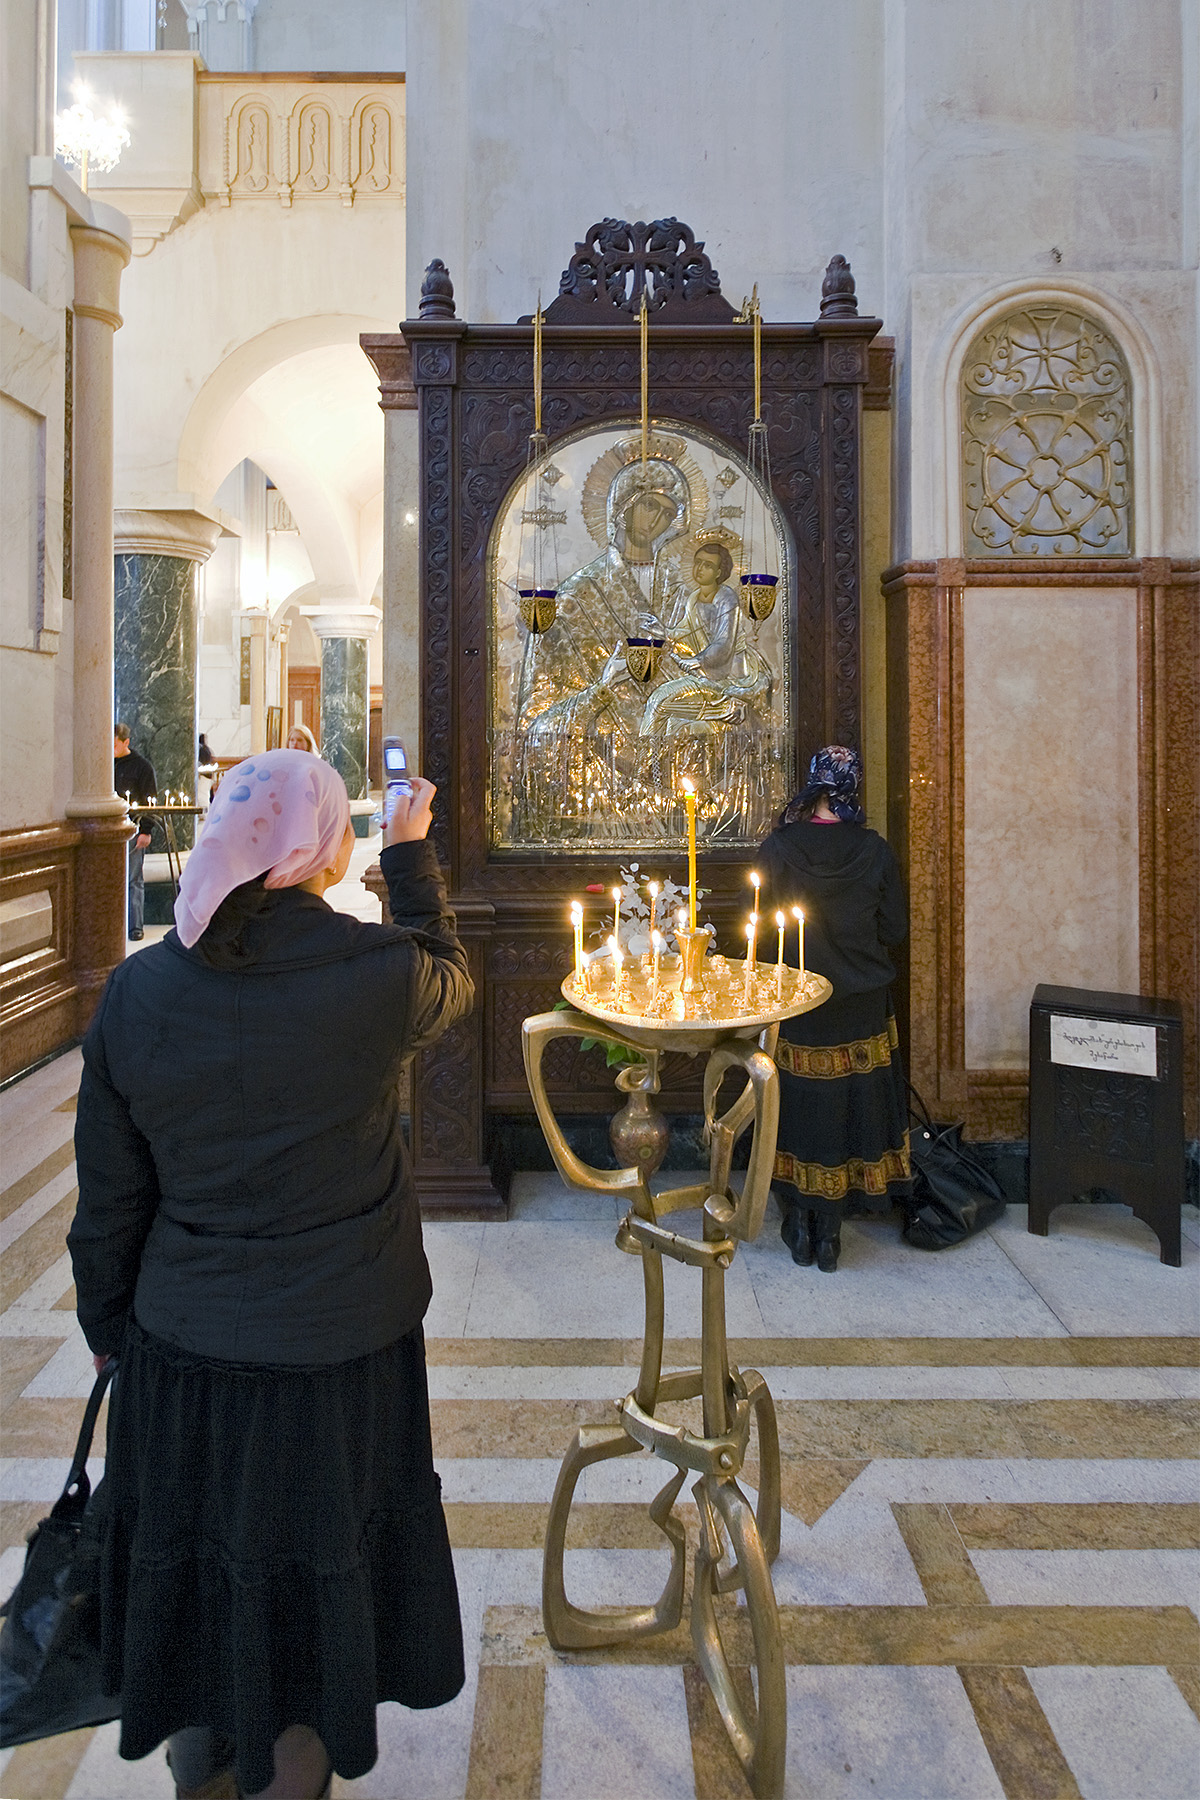 Beachtung des Fotografierverbotes in der Samba-Kathedrale in Tiflis